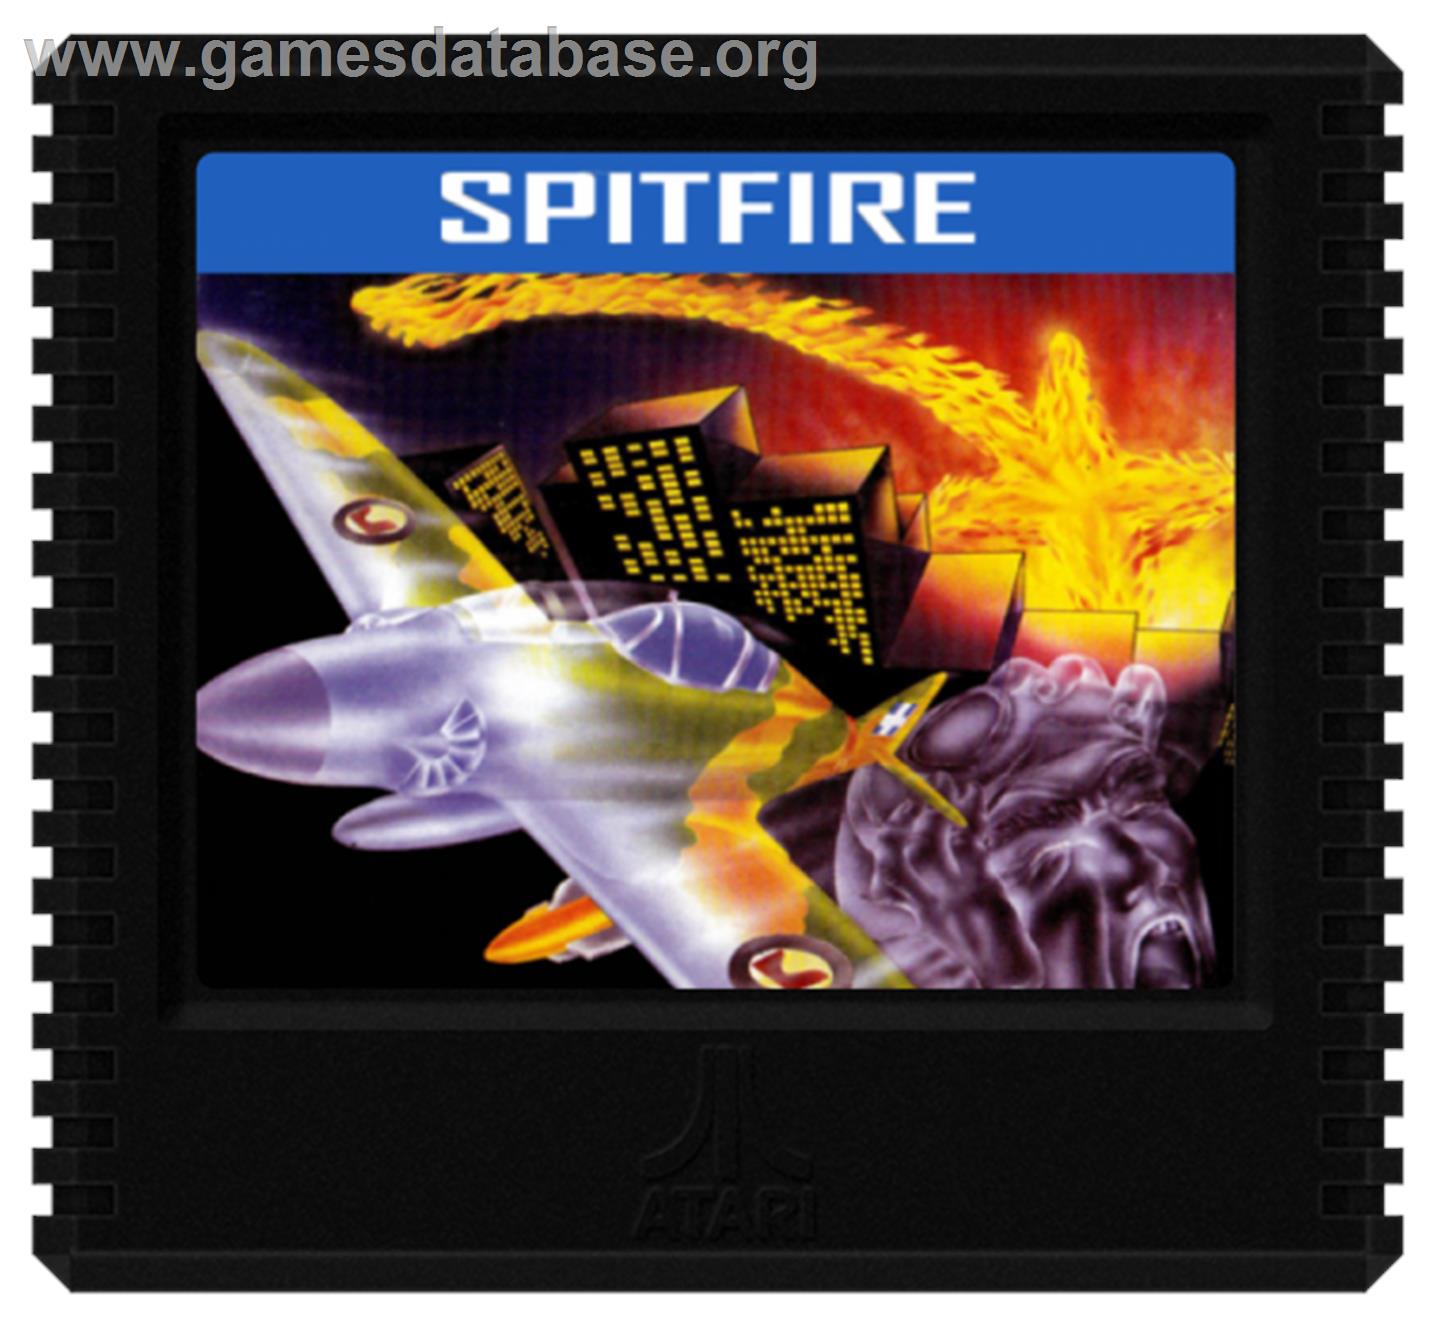 Spitfire - Atari 5200 - Artwork - Cartridge